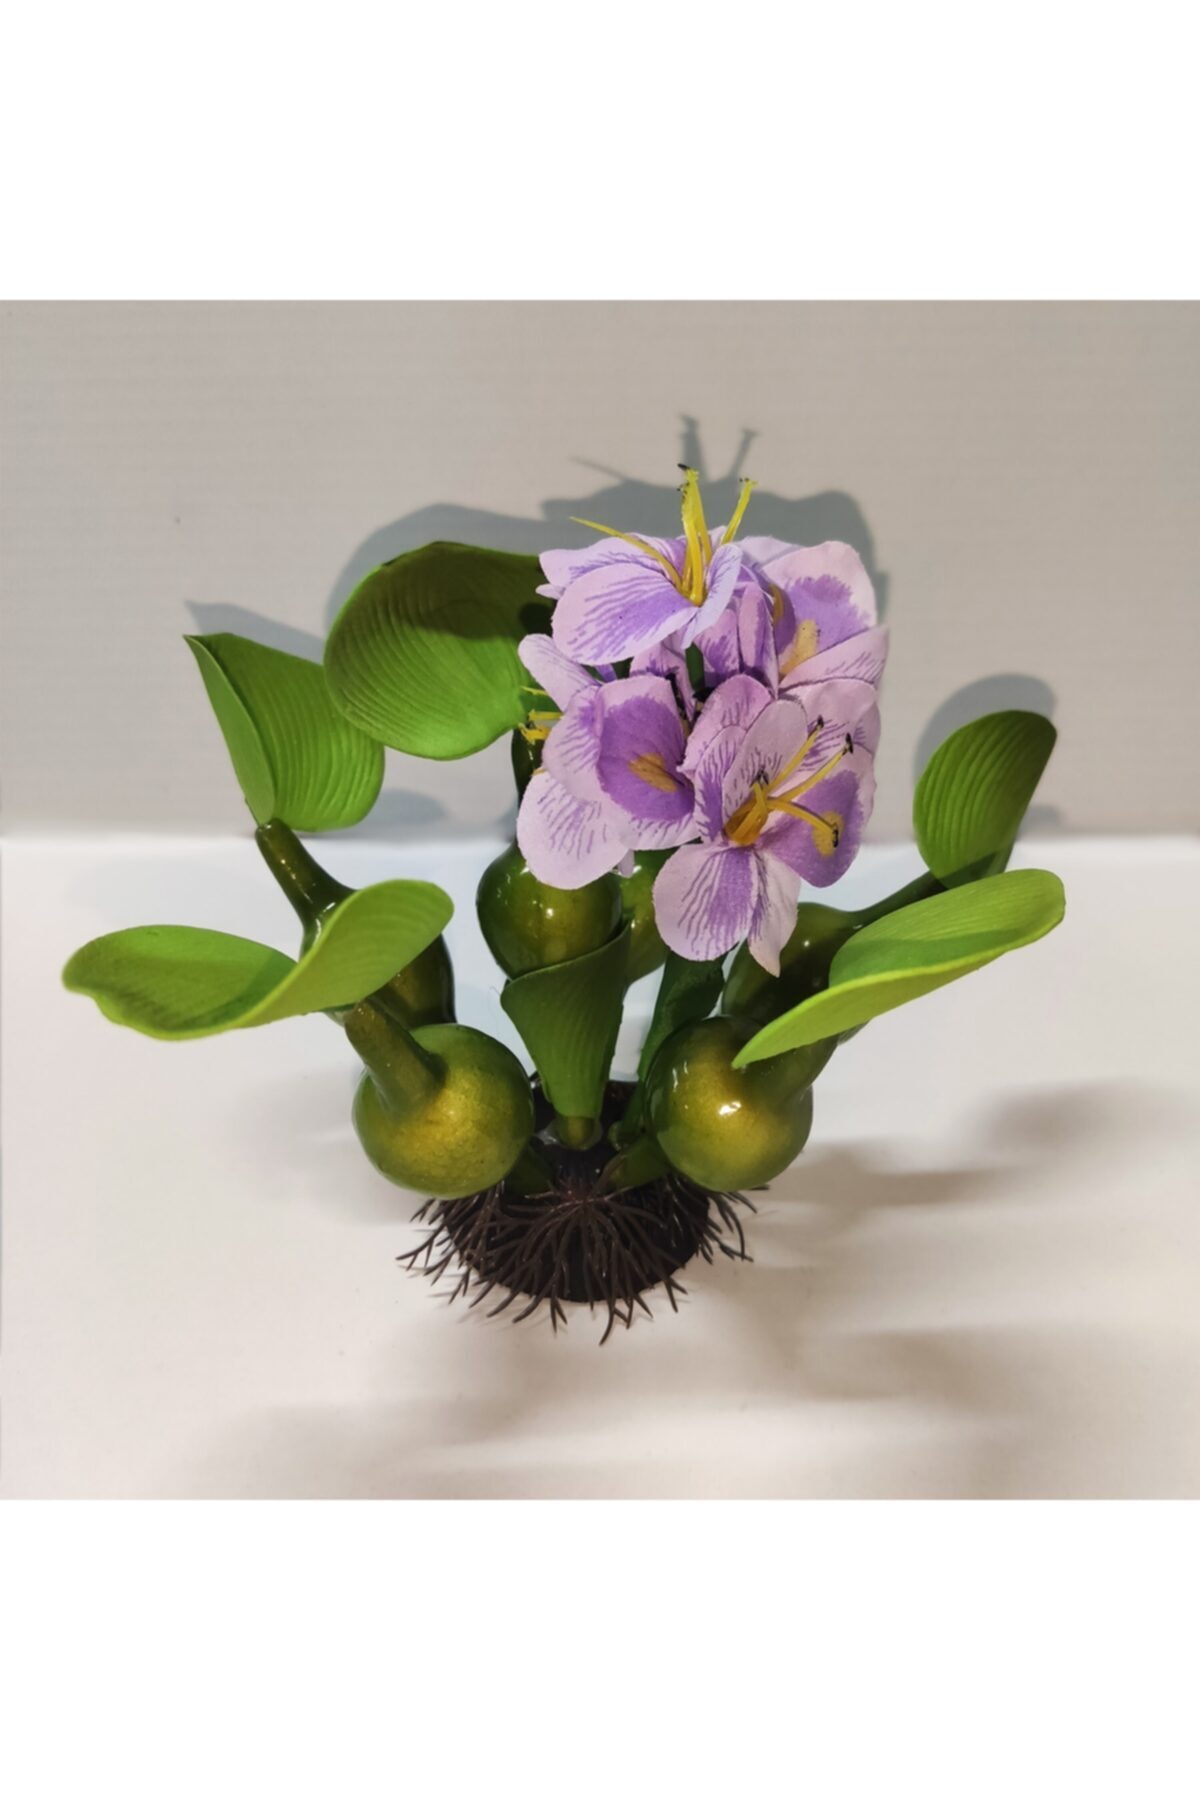 Aquaplant Tls Su Üstü Nülifer Yapay Akvaryum Bitkisi - Çiçekli